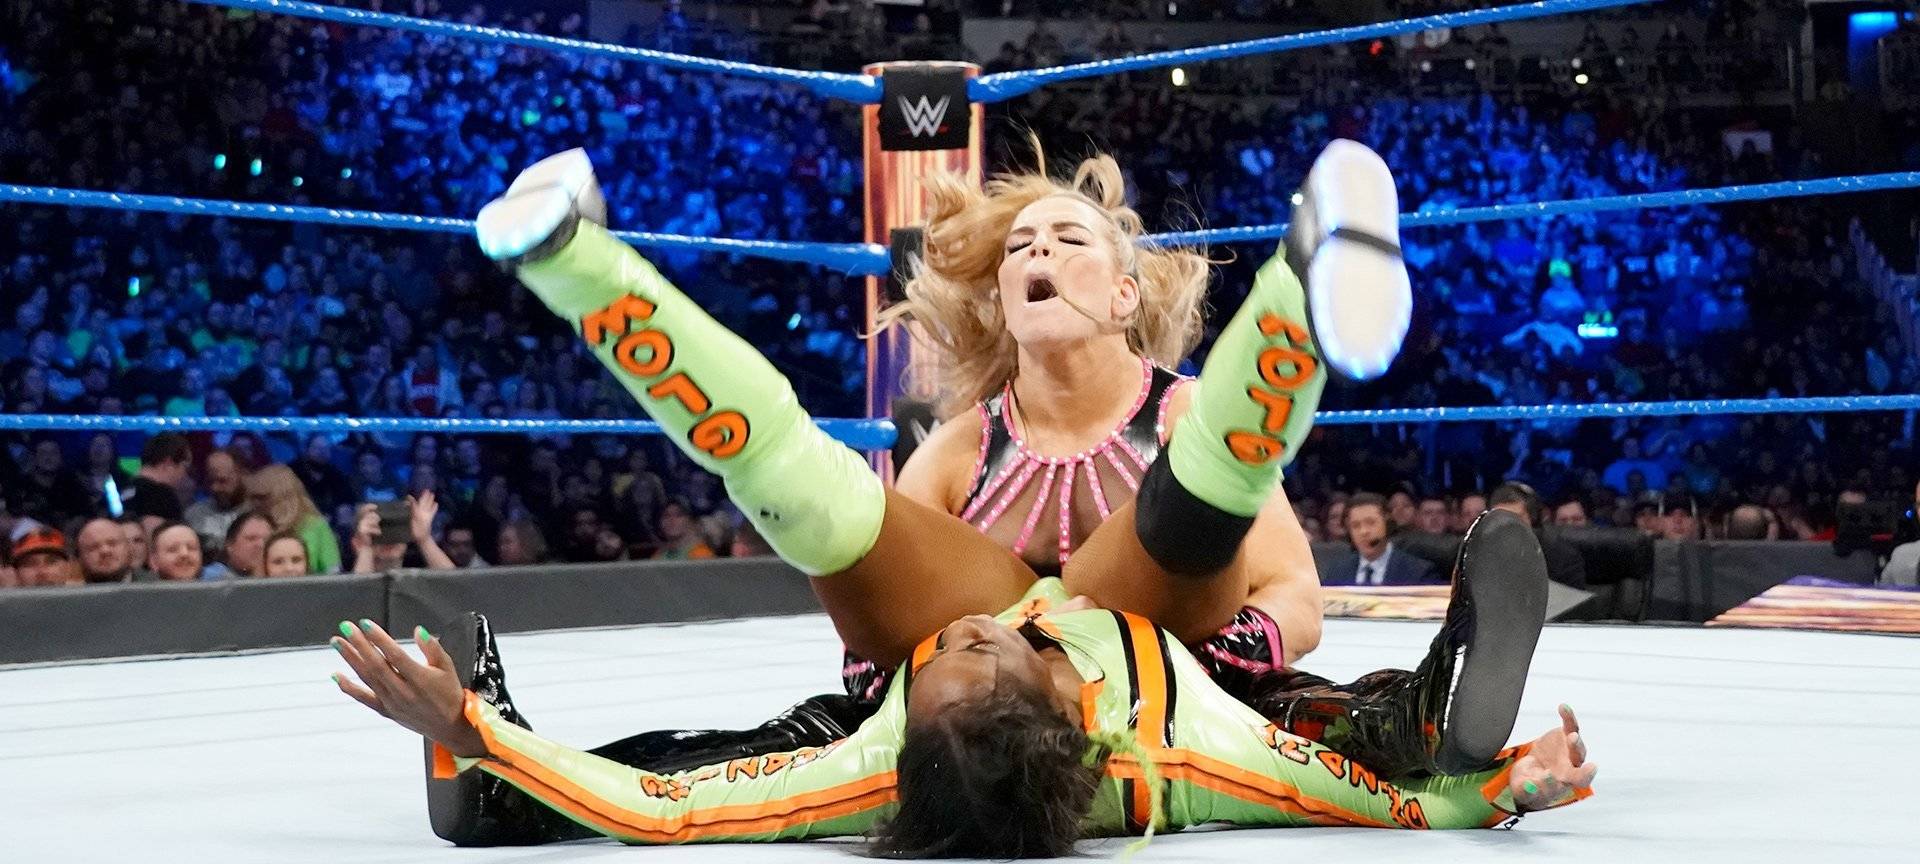 Natalya drops Naomi with a stinging powerbomb: WWE Fastlane 2018 (WWE Network Exclusive)